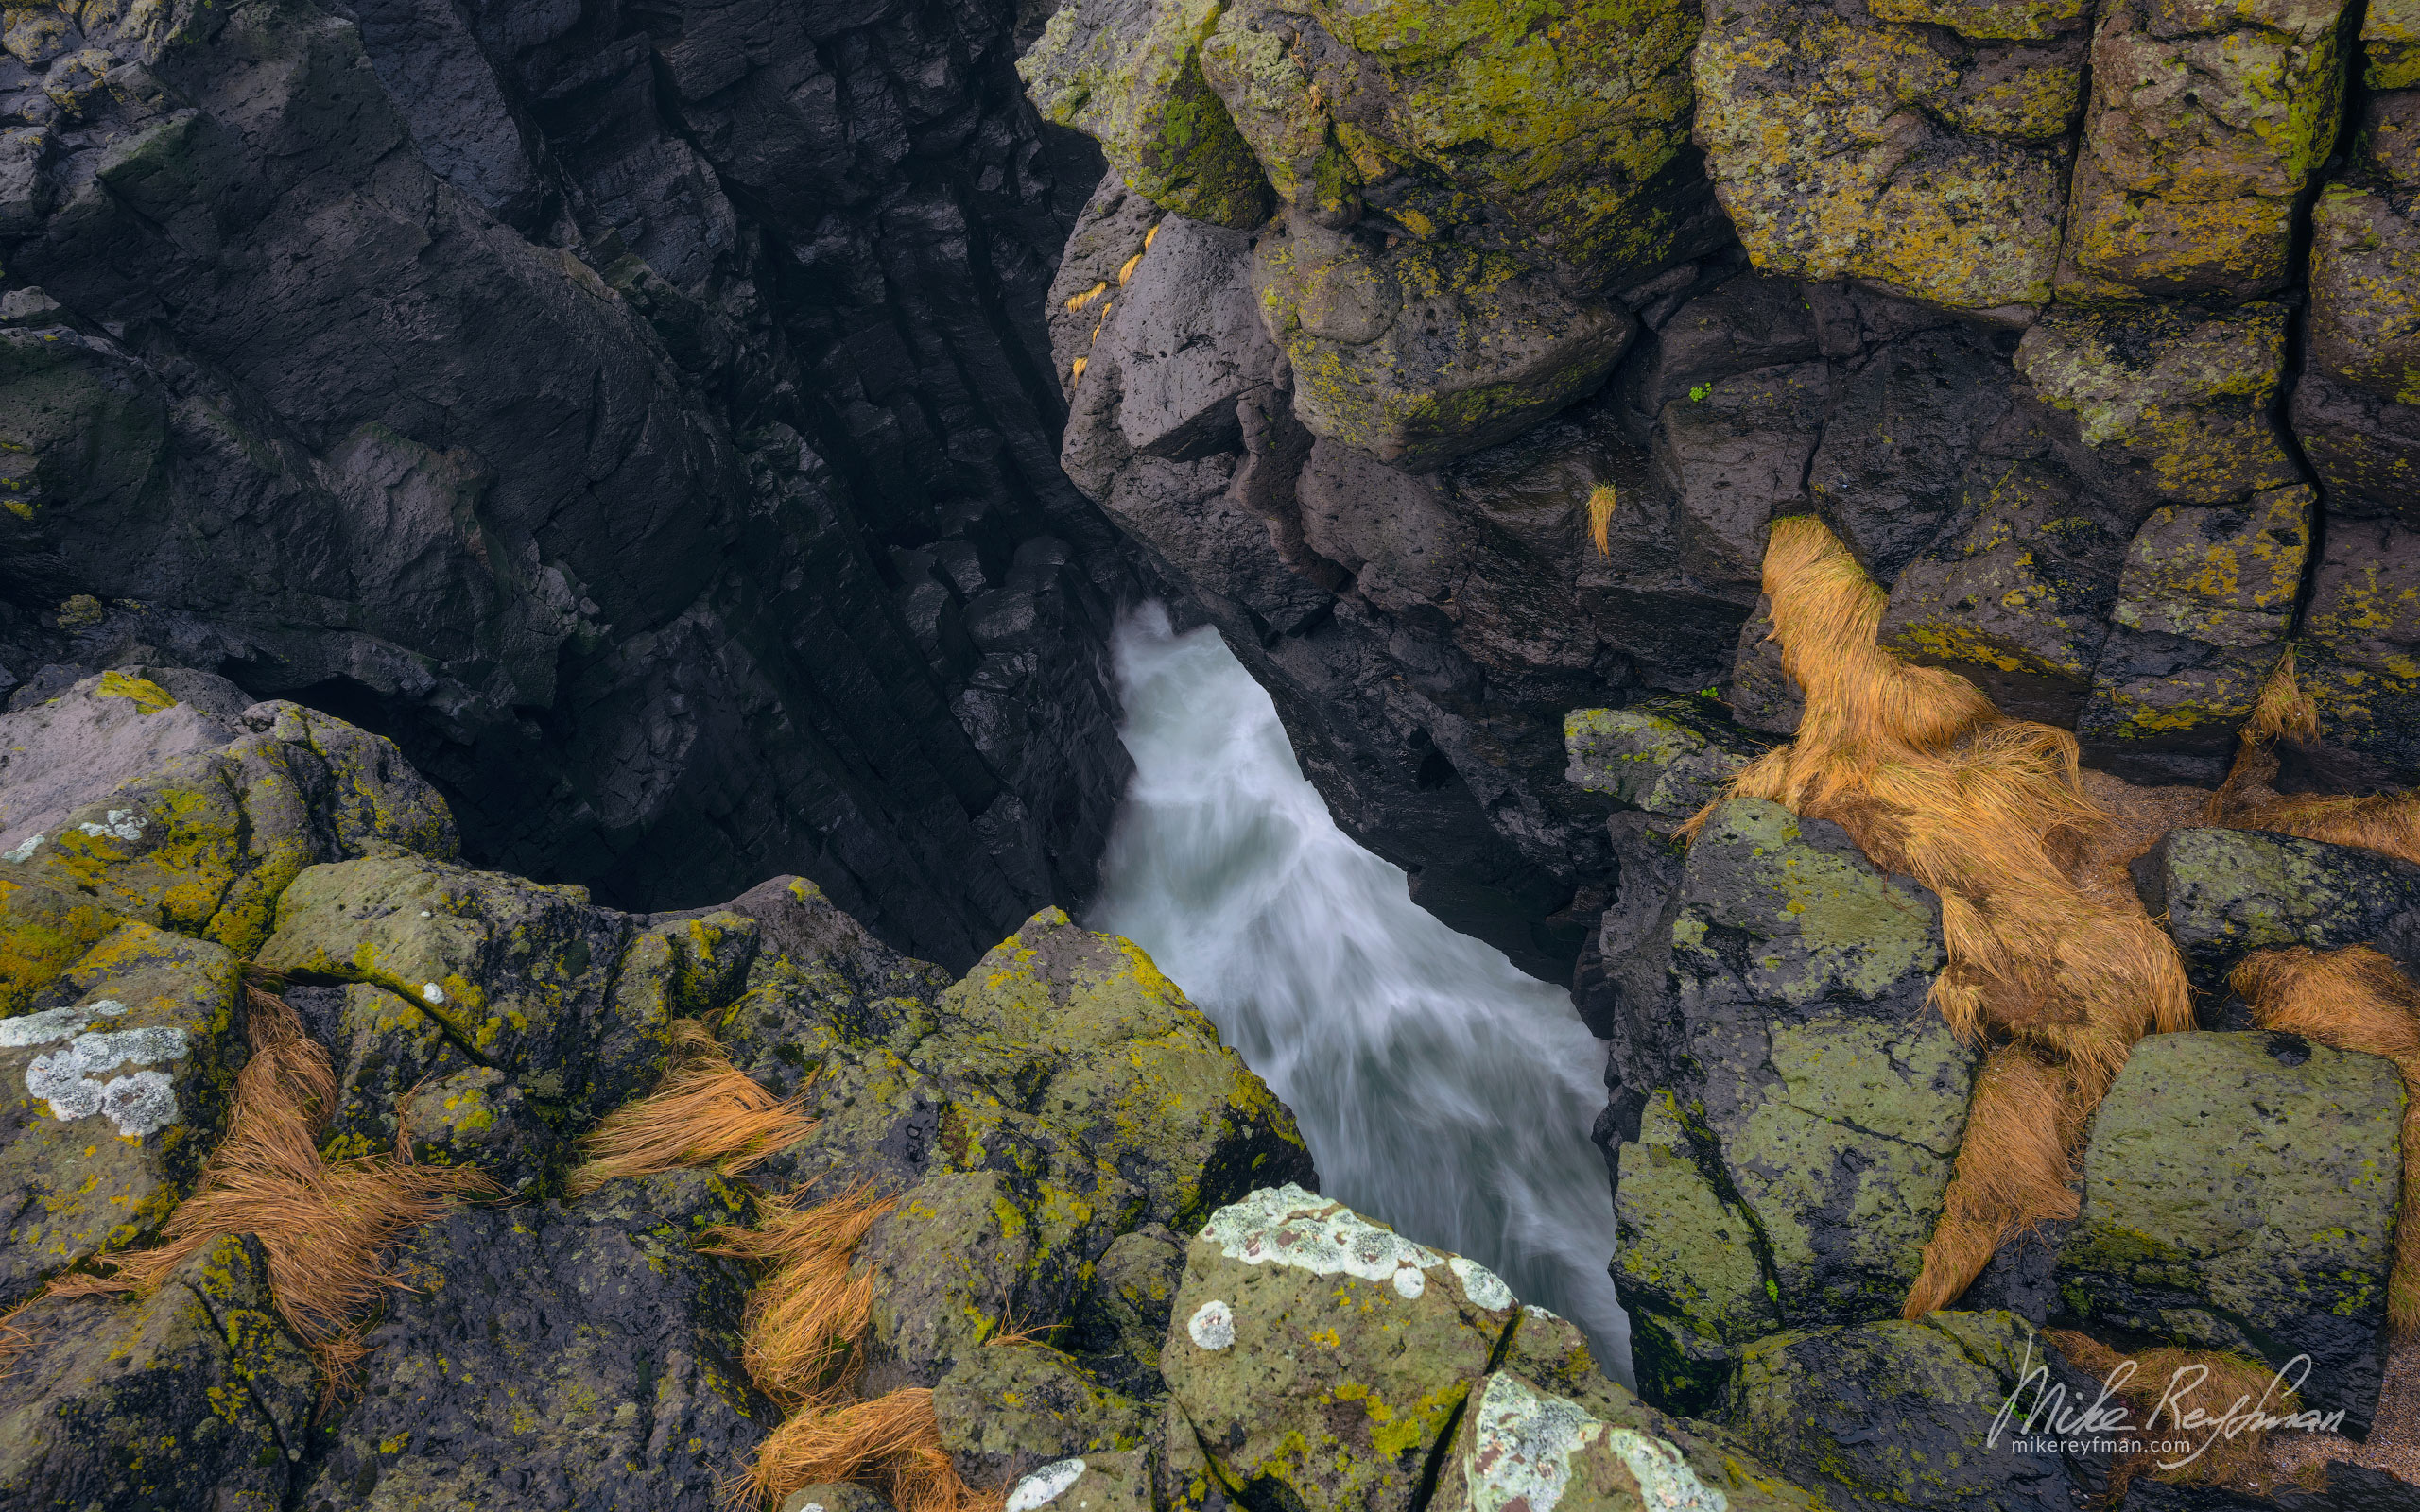 Blowhole Basalt Sea Cliffs. Arnarstapi nature preserve, Snaefellsness Peninsula, Iceland. 073-IC-CL_10P4669 - Where Lava Meets the Ocean. Iceland coastline. - Mike Reyfman Photography